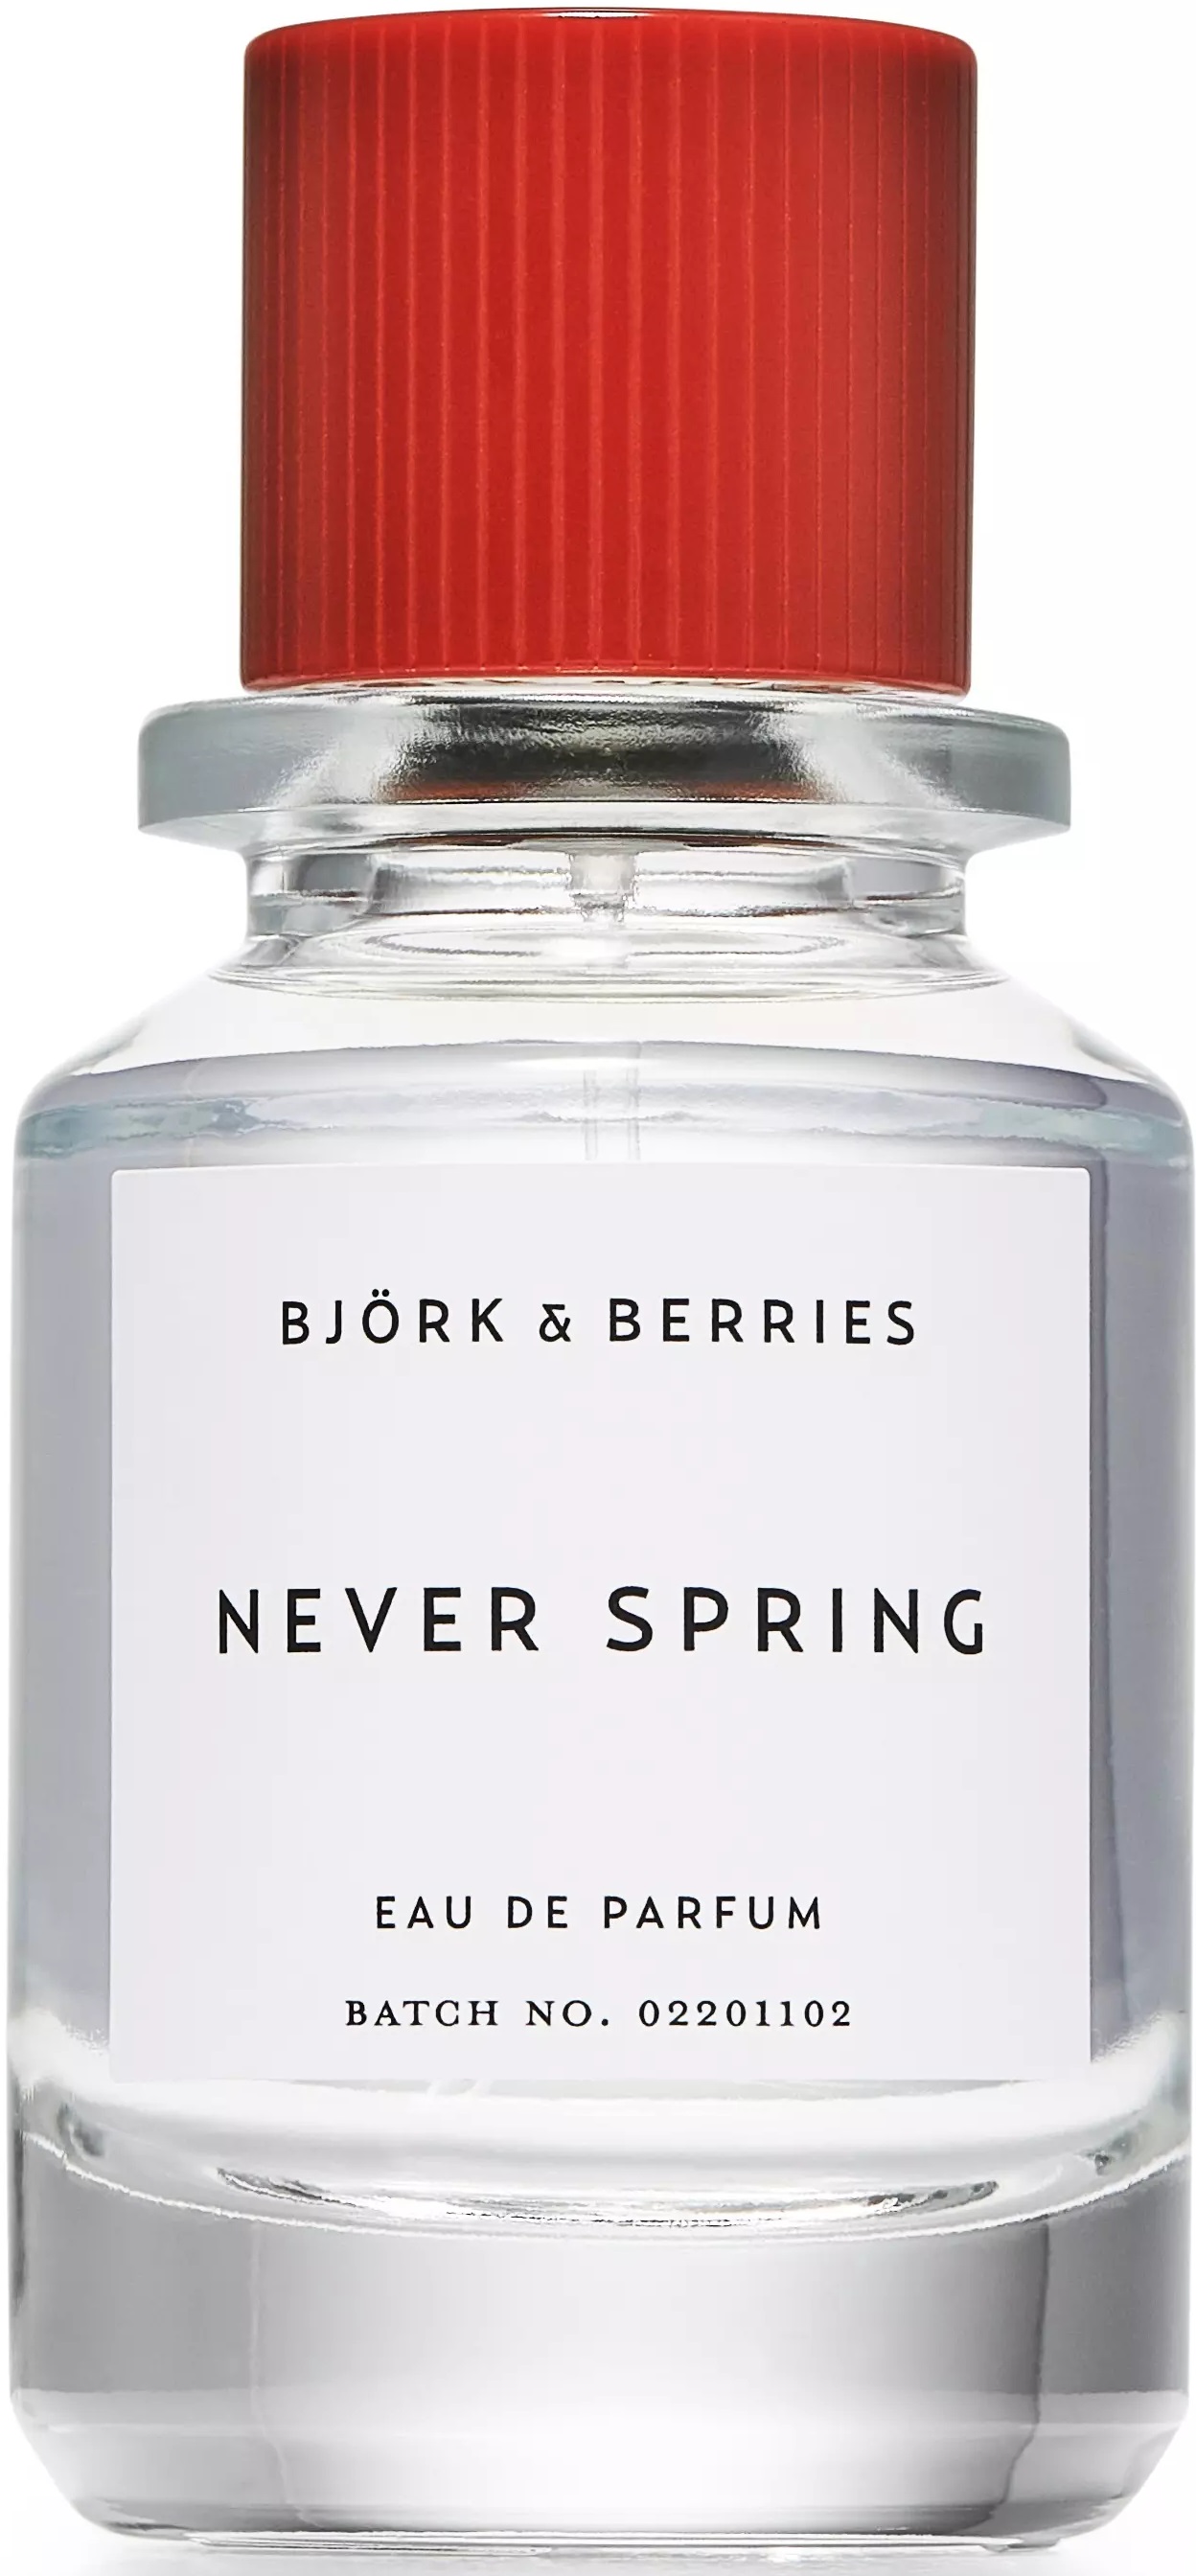 bjork & berries never spring